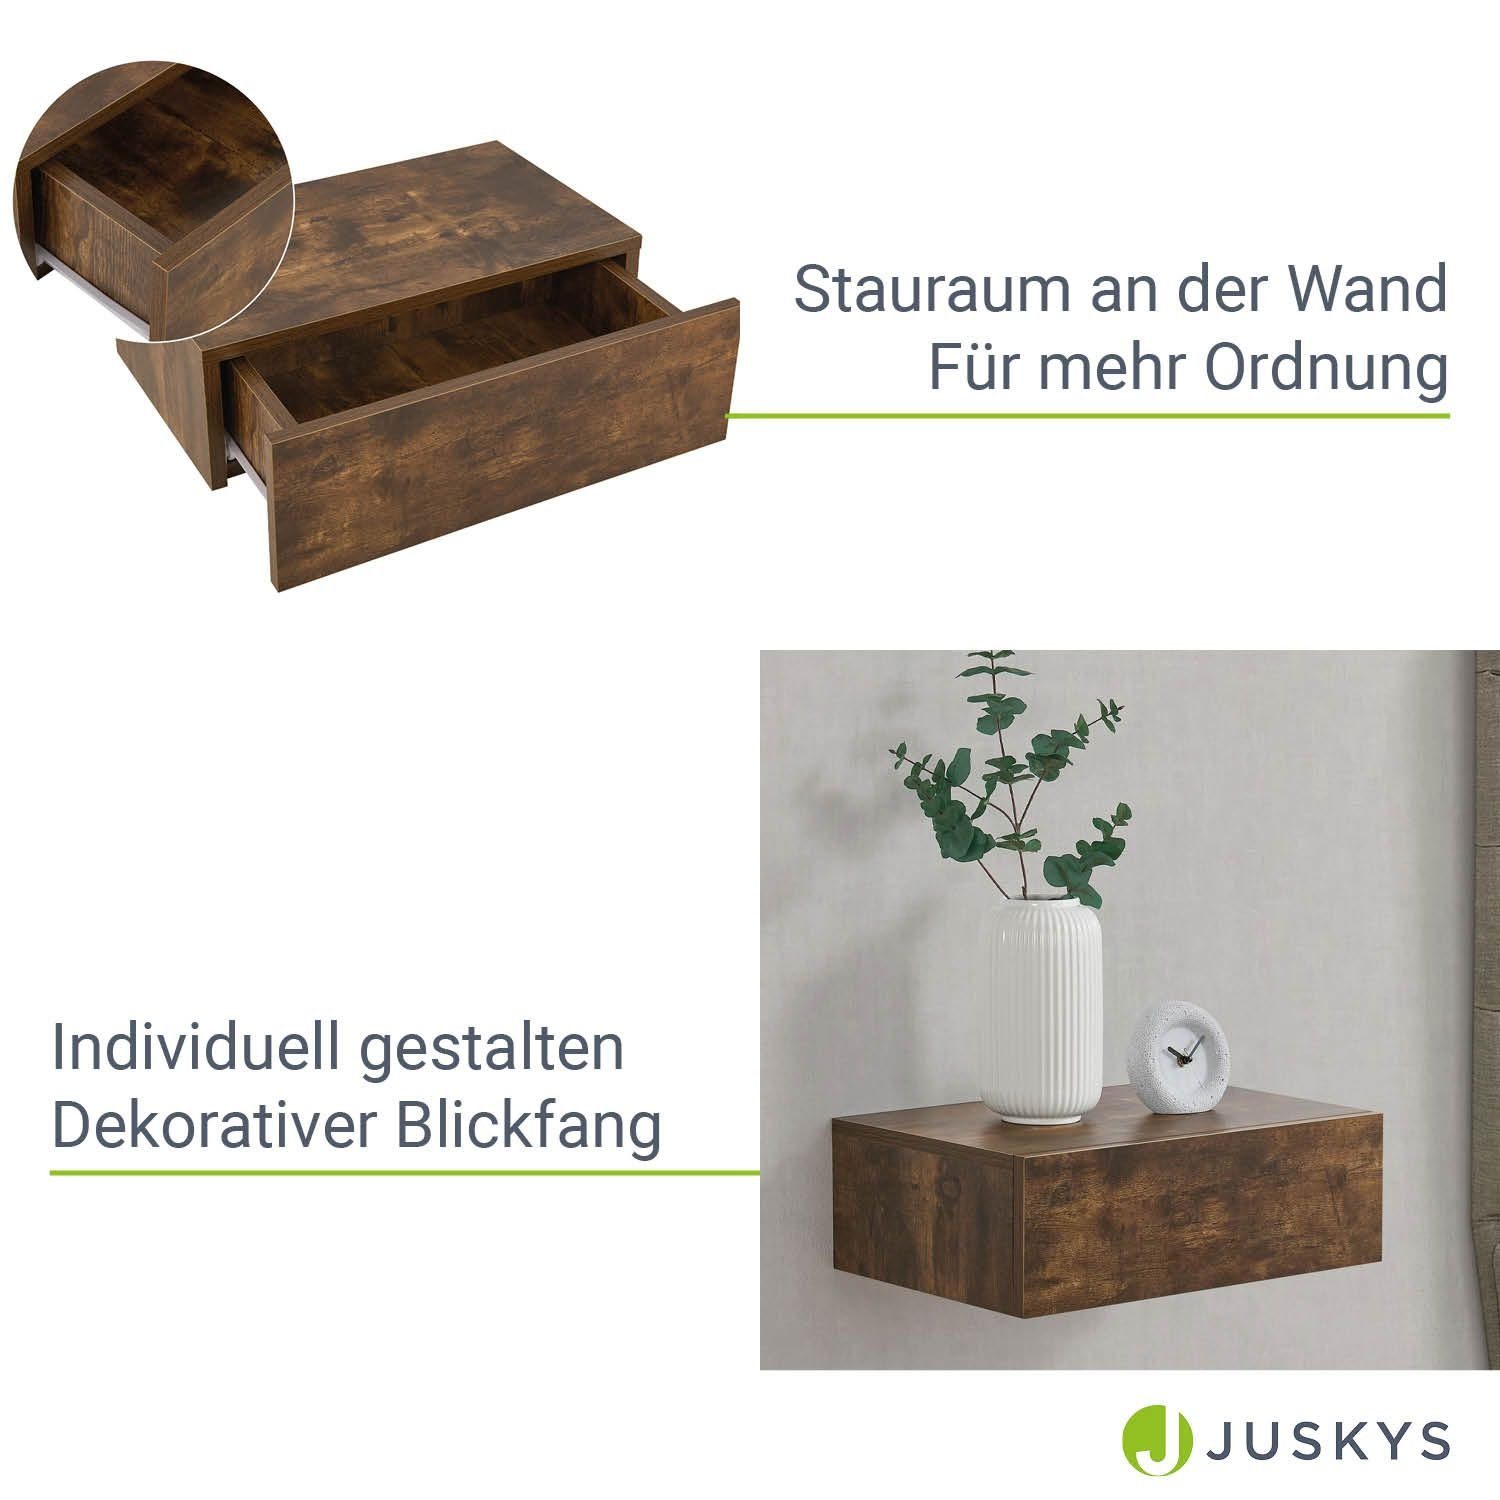 Regal, 1 Natur Holz, Wandregal, Schublade inkl. Juskys Befestigungsmaterial | Natur pro Wandmontage,